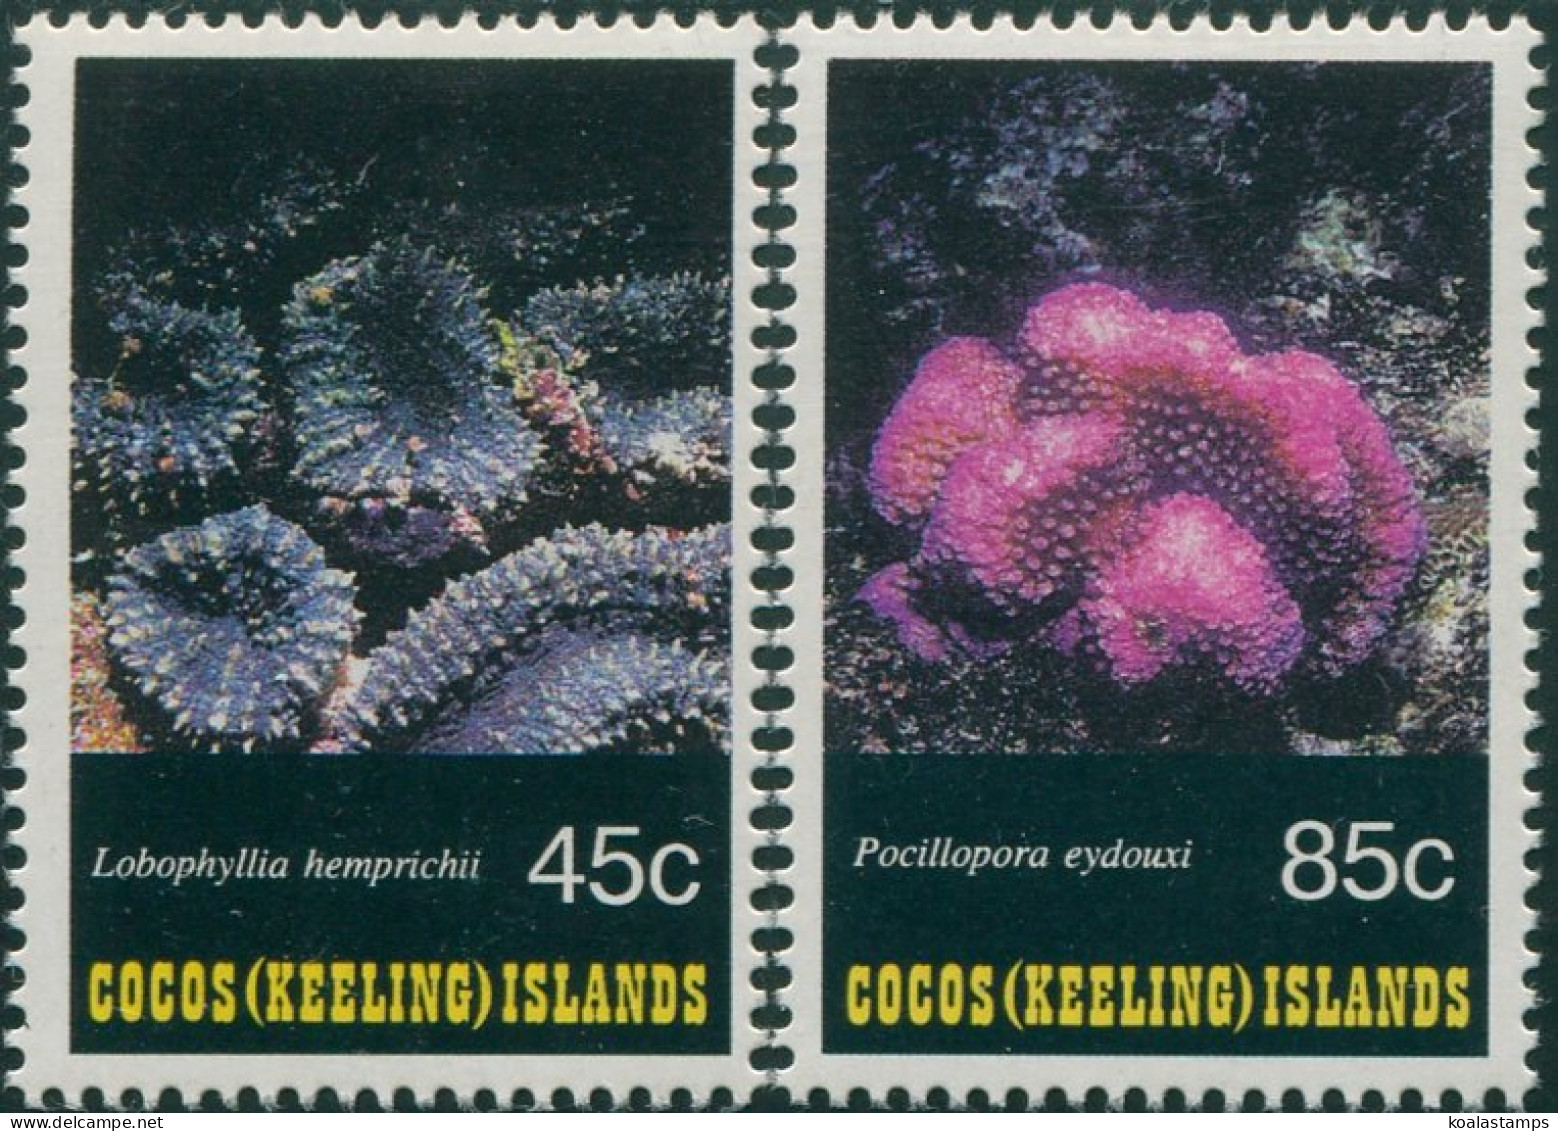 Cocos Islands 1992 SG276 Corals Part Set MNH - Kokosinseln (Keeling Islands)